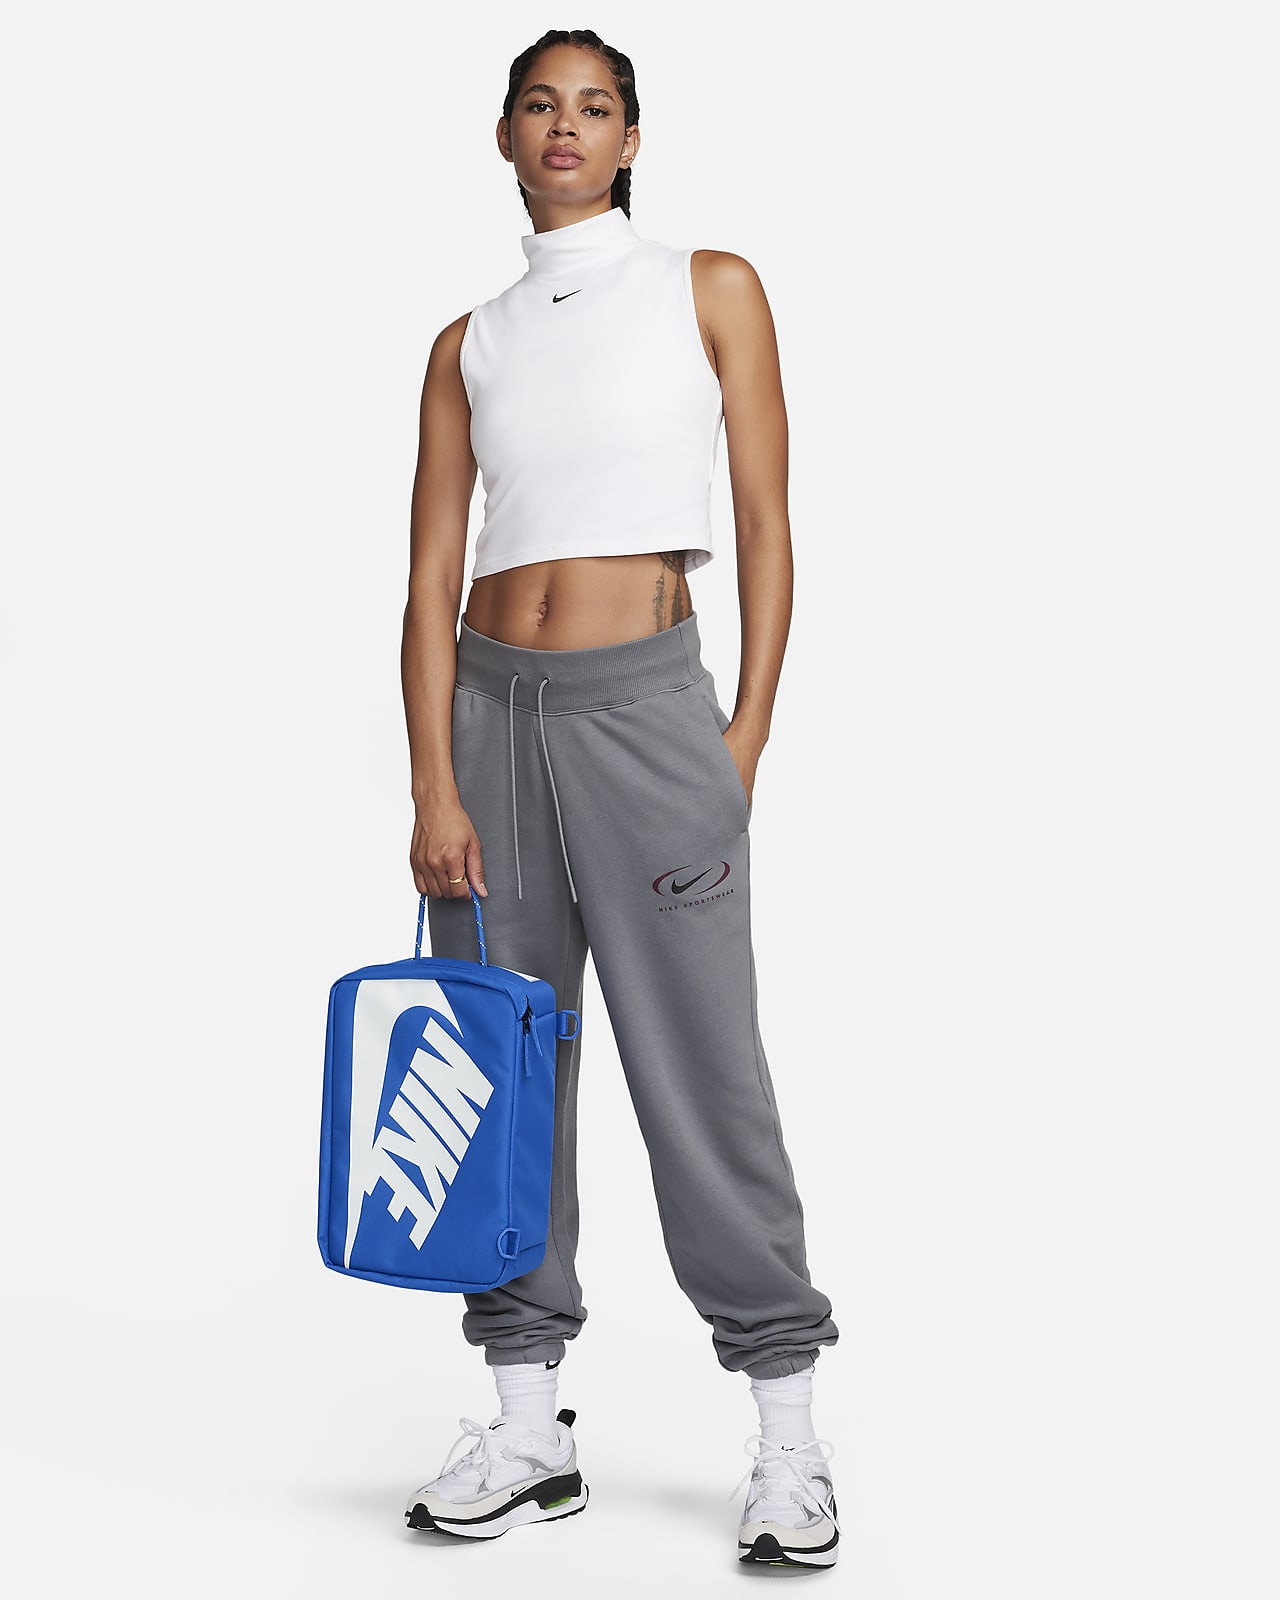 Nike bag set